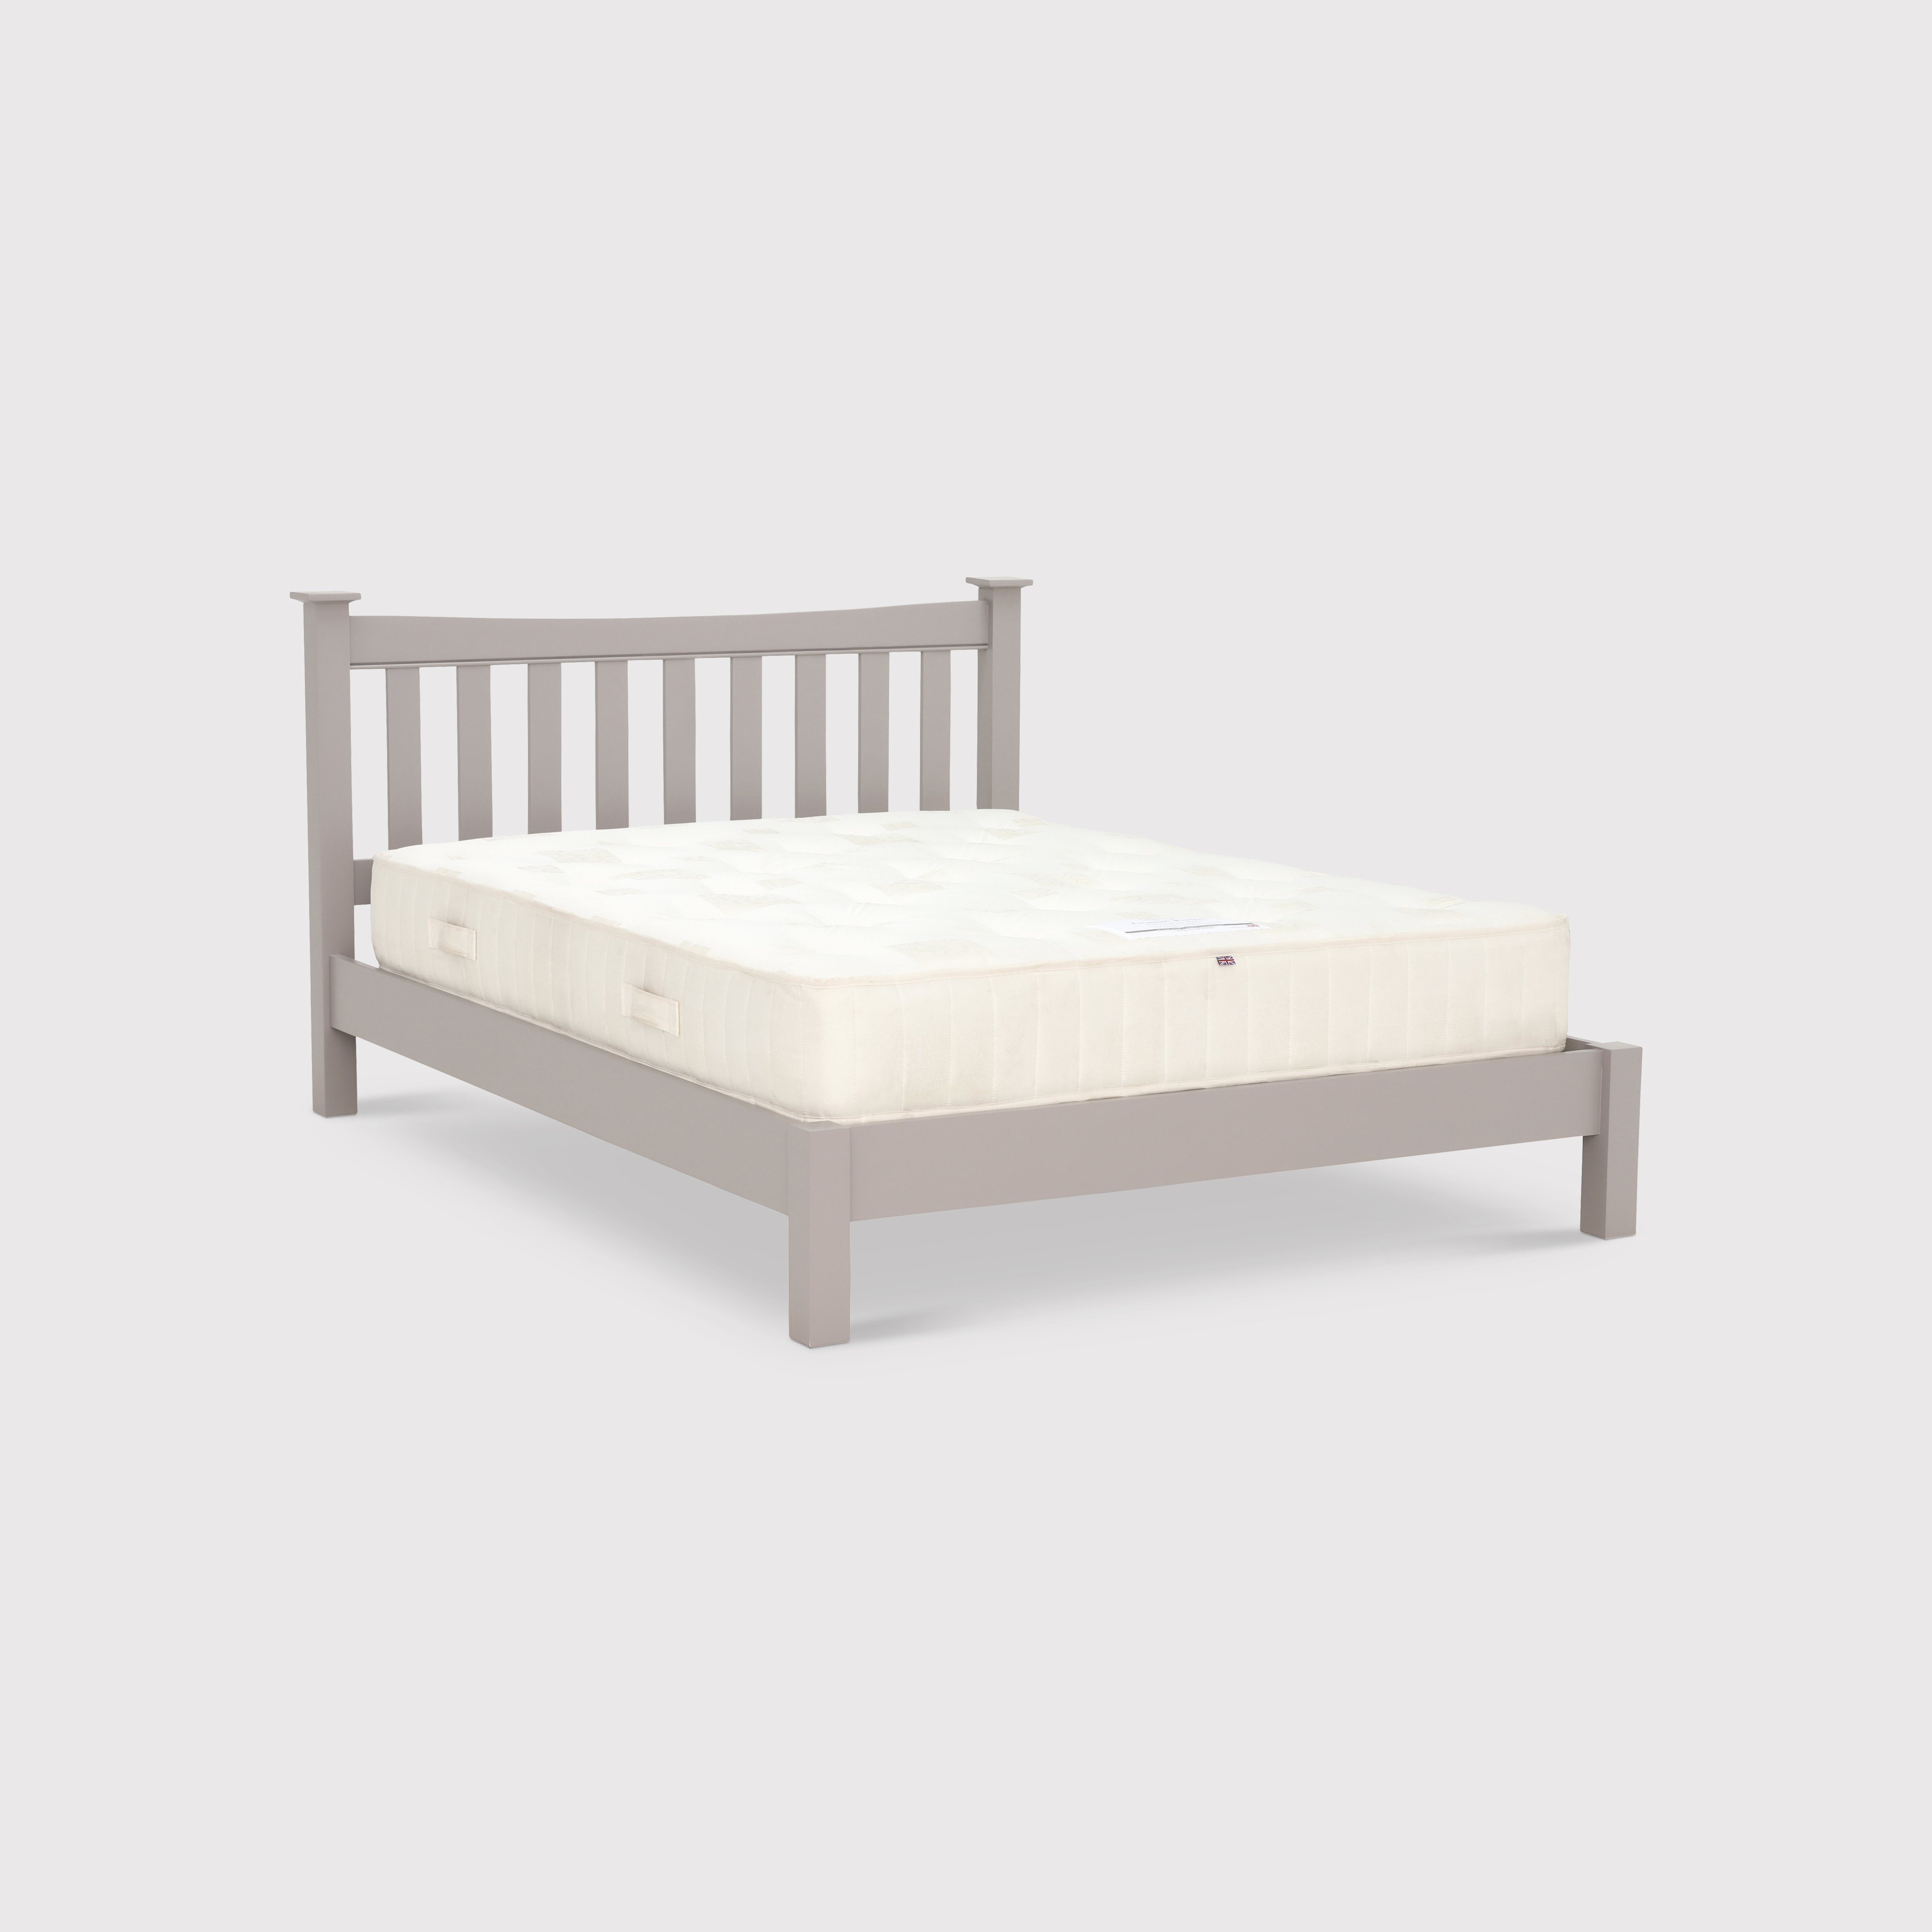 Helmsley 150cm Bed Frame, Grey | King | Barker & Stonehouse